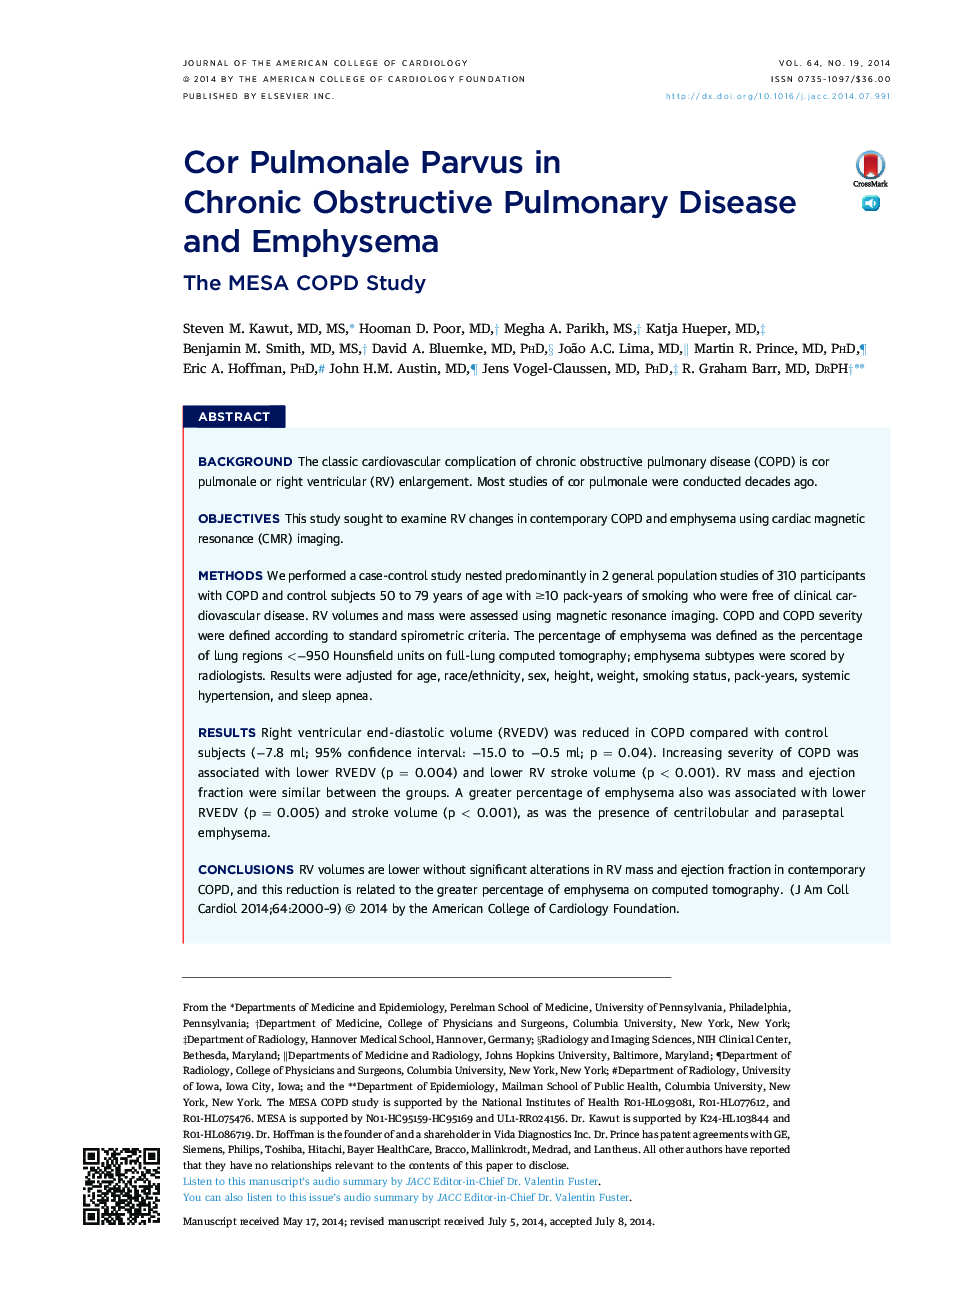 Cor Pulmonale Parvus in Chronic Obstructive Pulmonary Disease and Emphysema : The MESA COPD Study